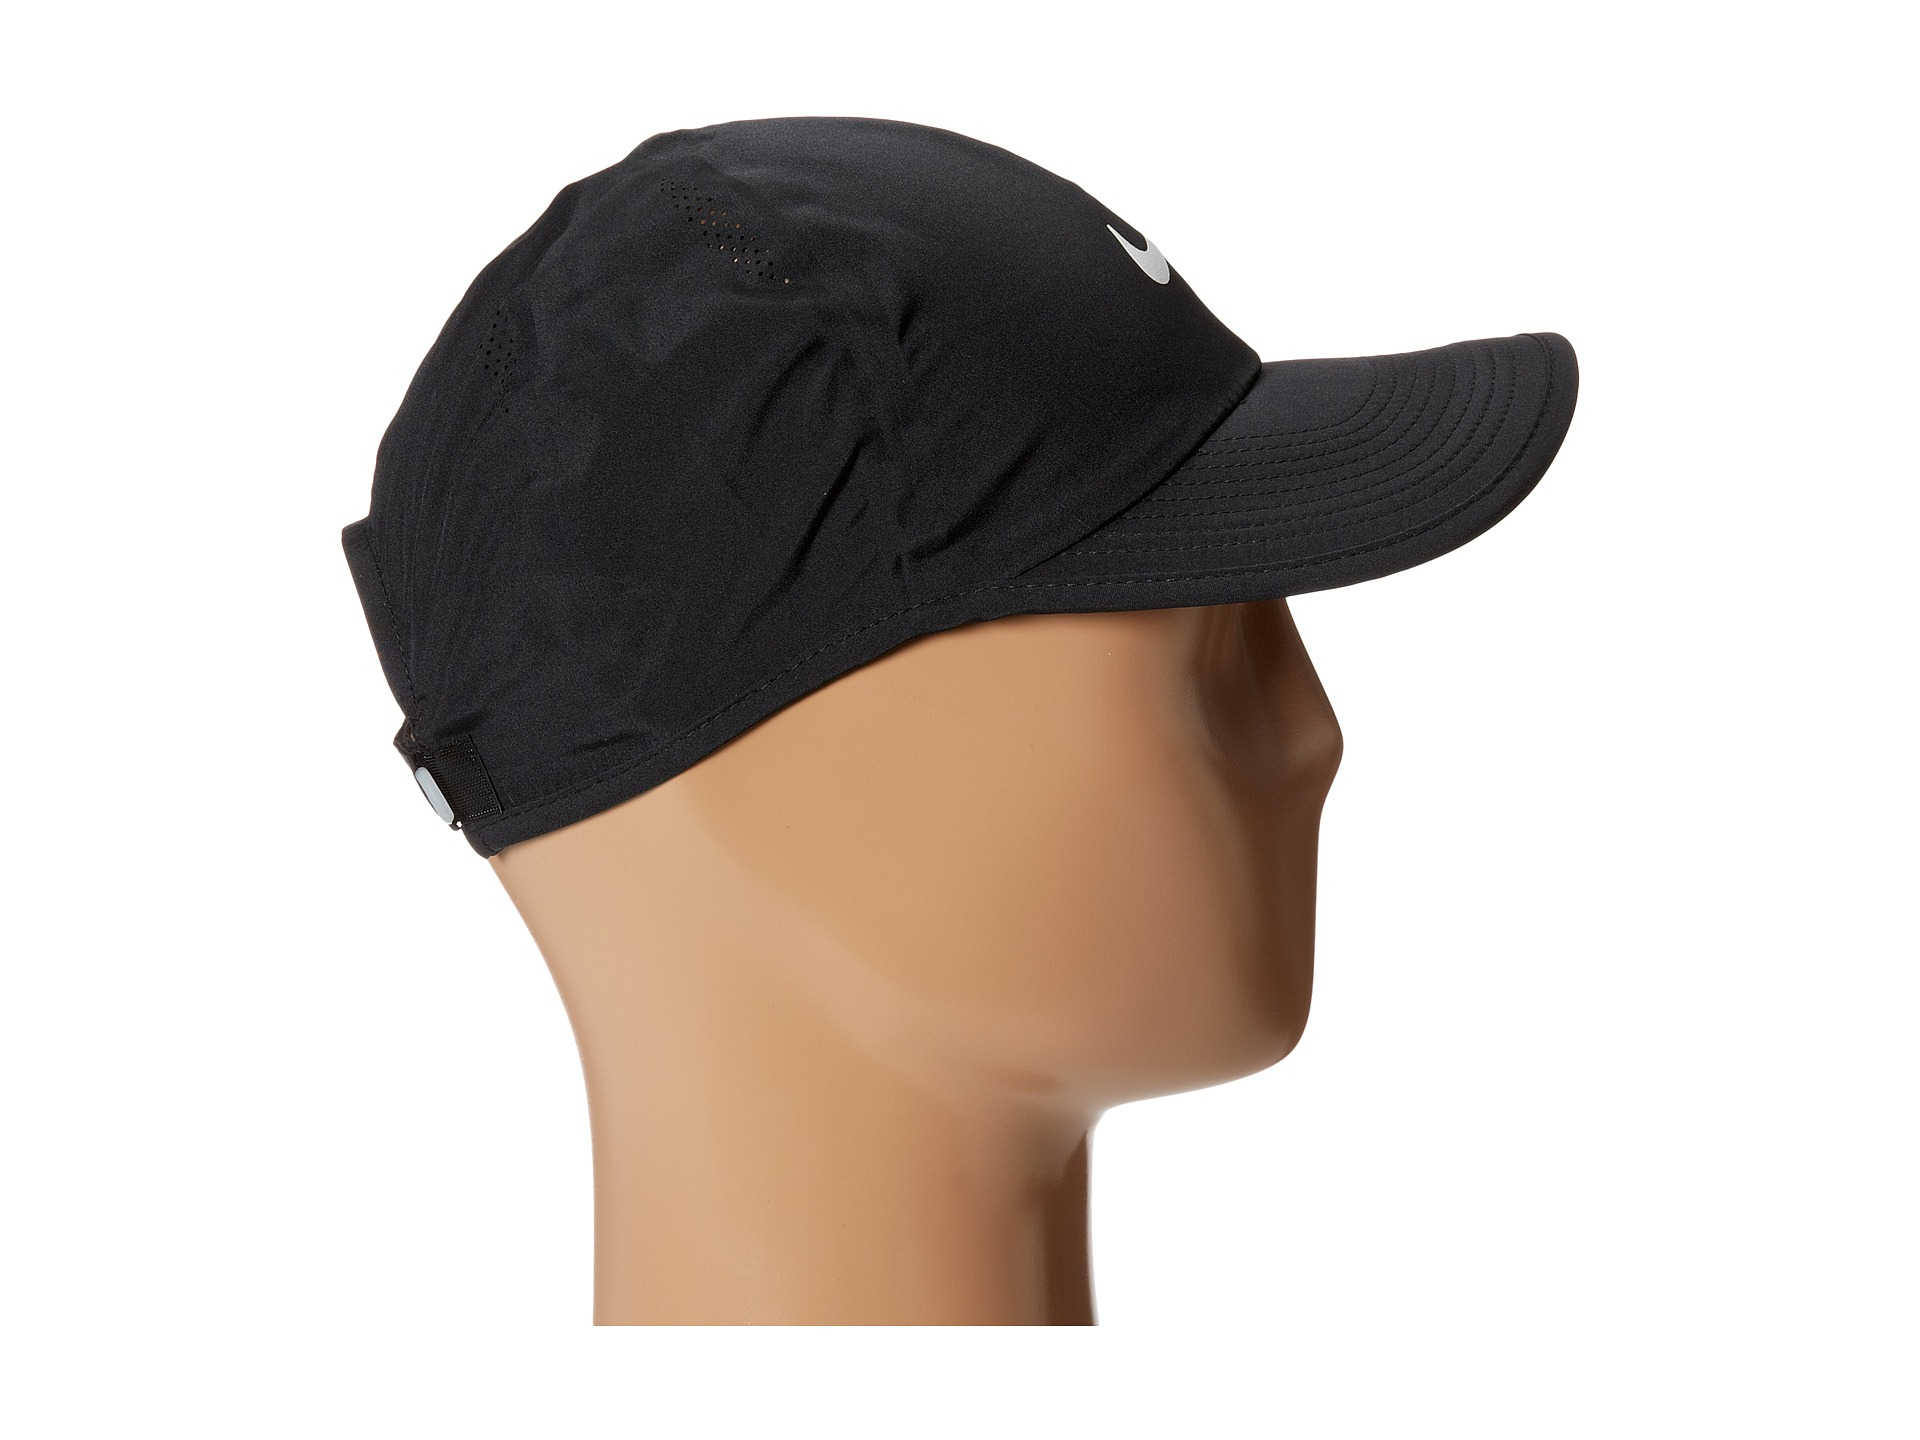 Nike Featherlight 2.0 Dri-Fit Sports Cap in Black - Lyst